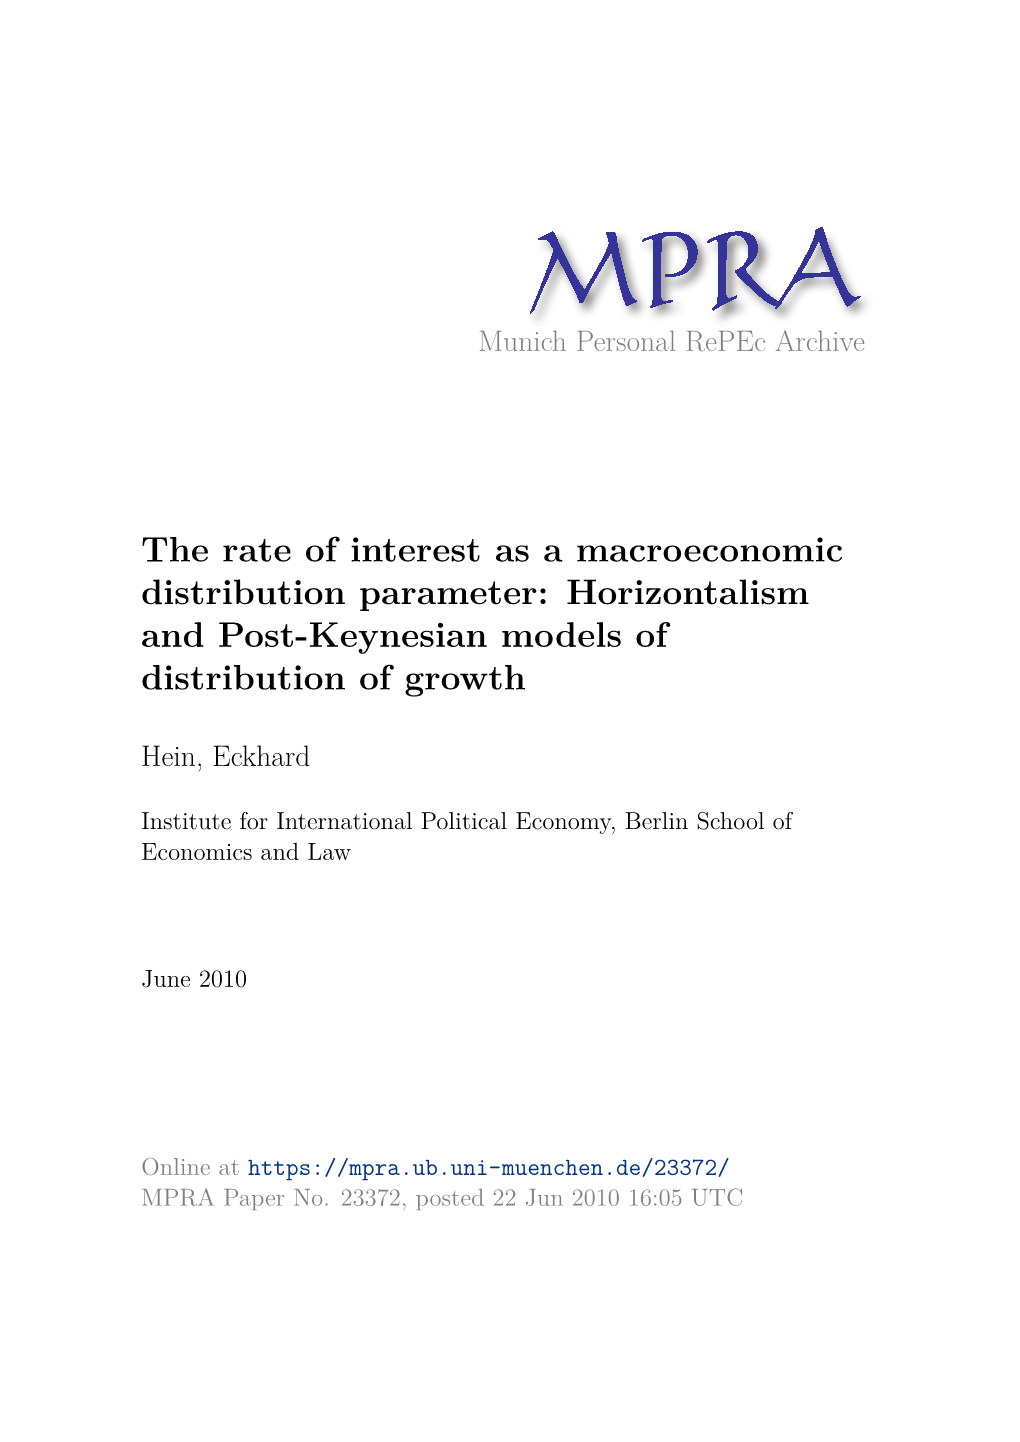 Horizontalism and Post-Keynesian Models of Distribution of Growth